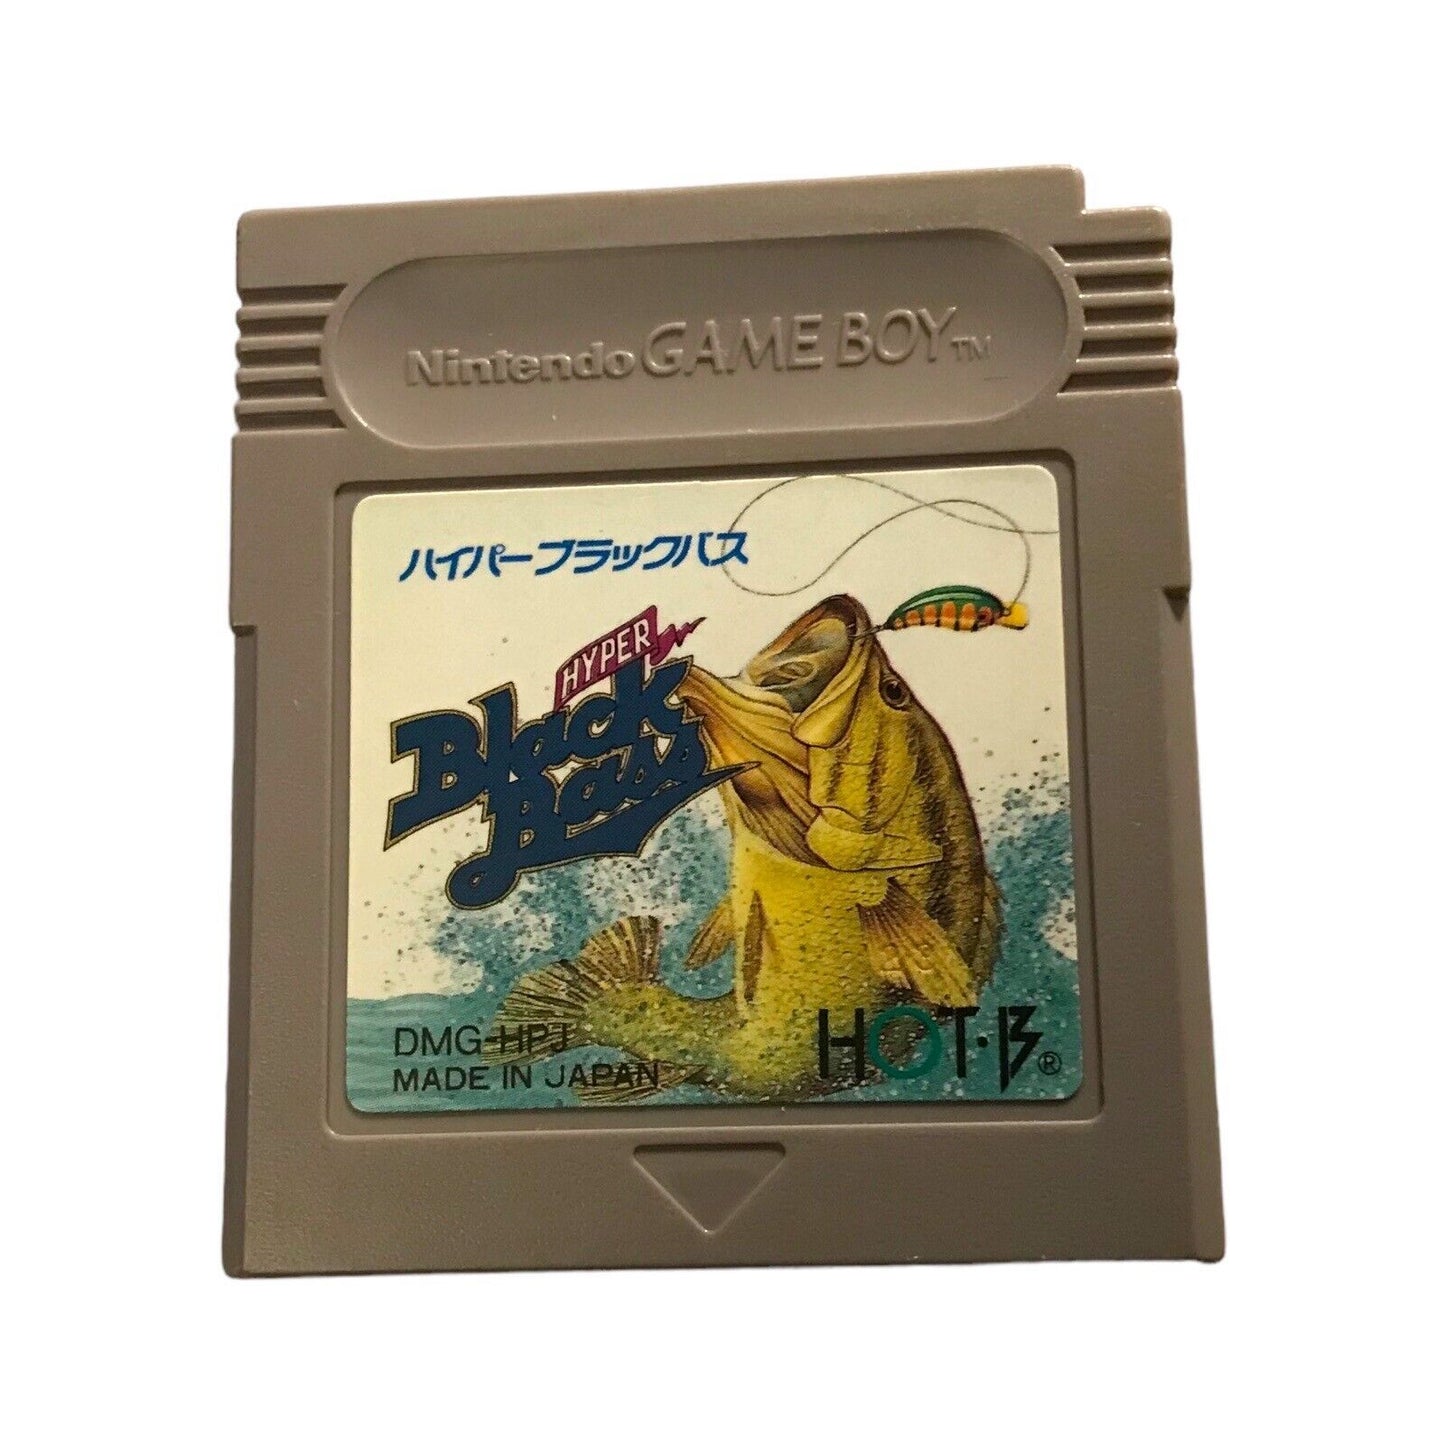 Black Bass: Lure Fishing 1992 for Game Boy, DMG-HPJ